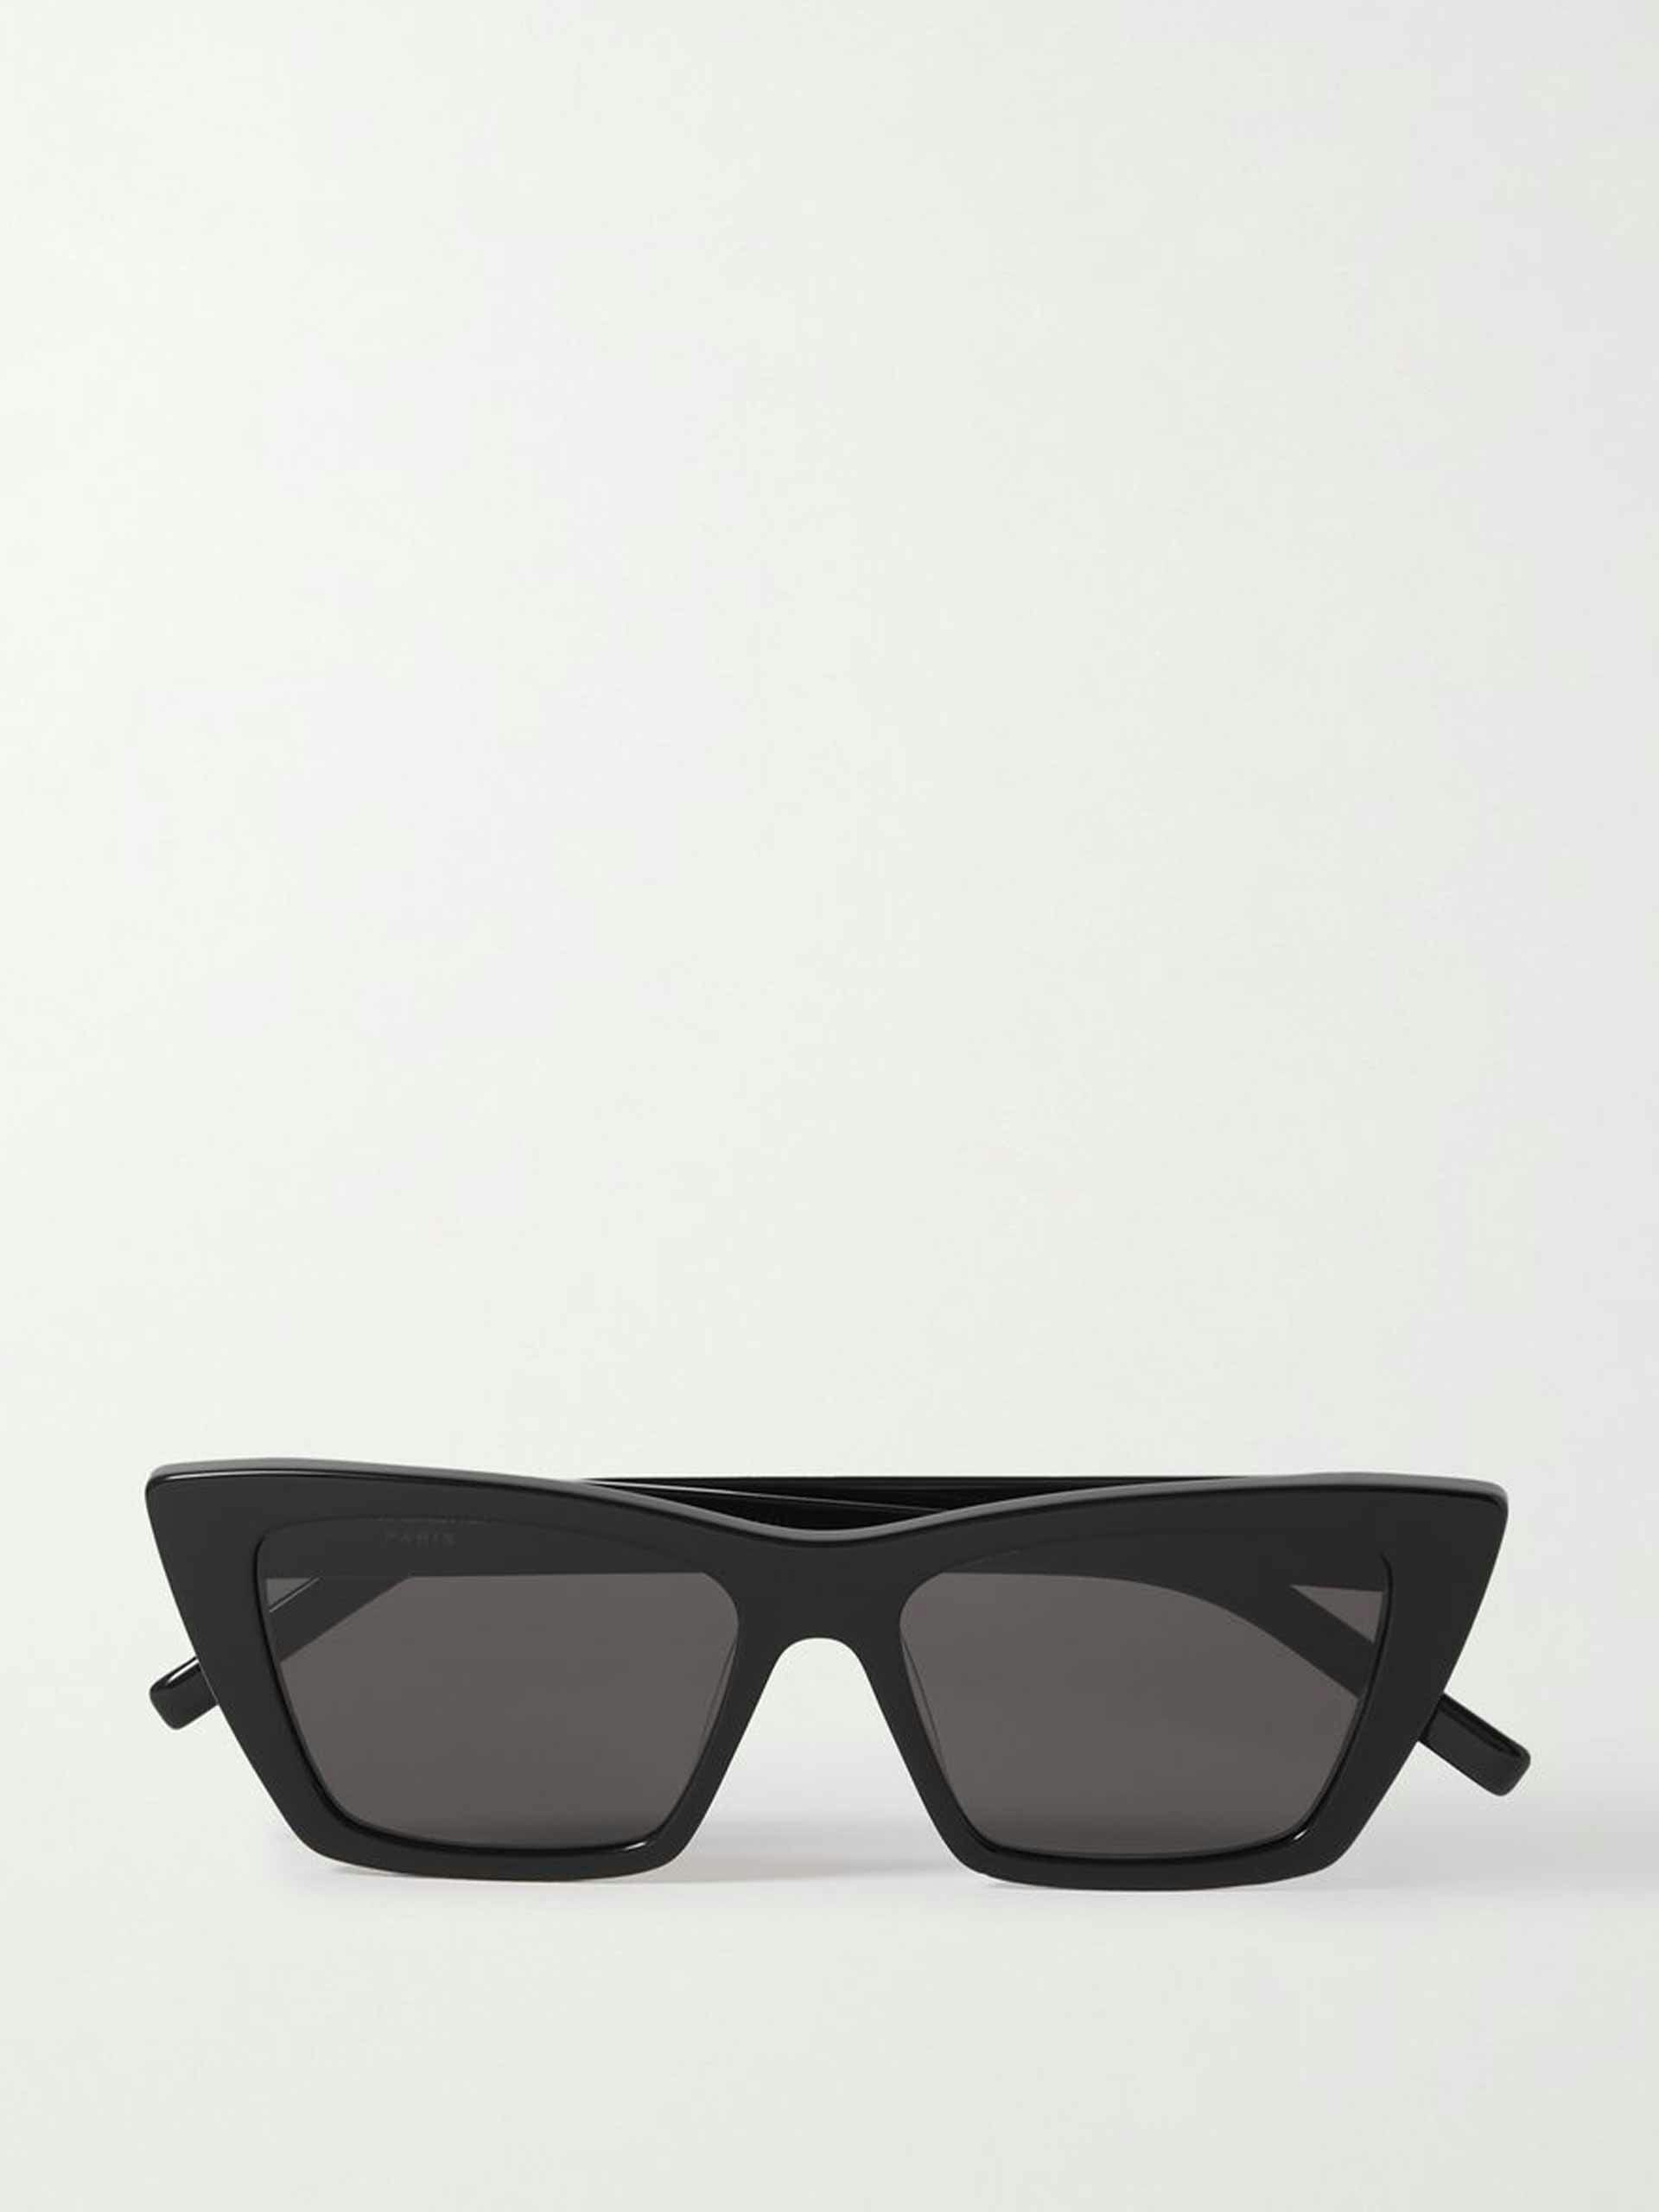 Black cat-eye acetate sunglasses